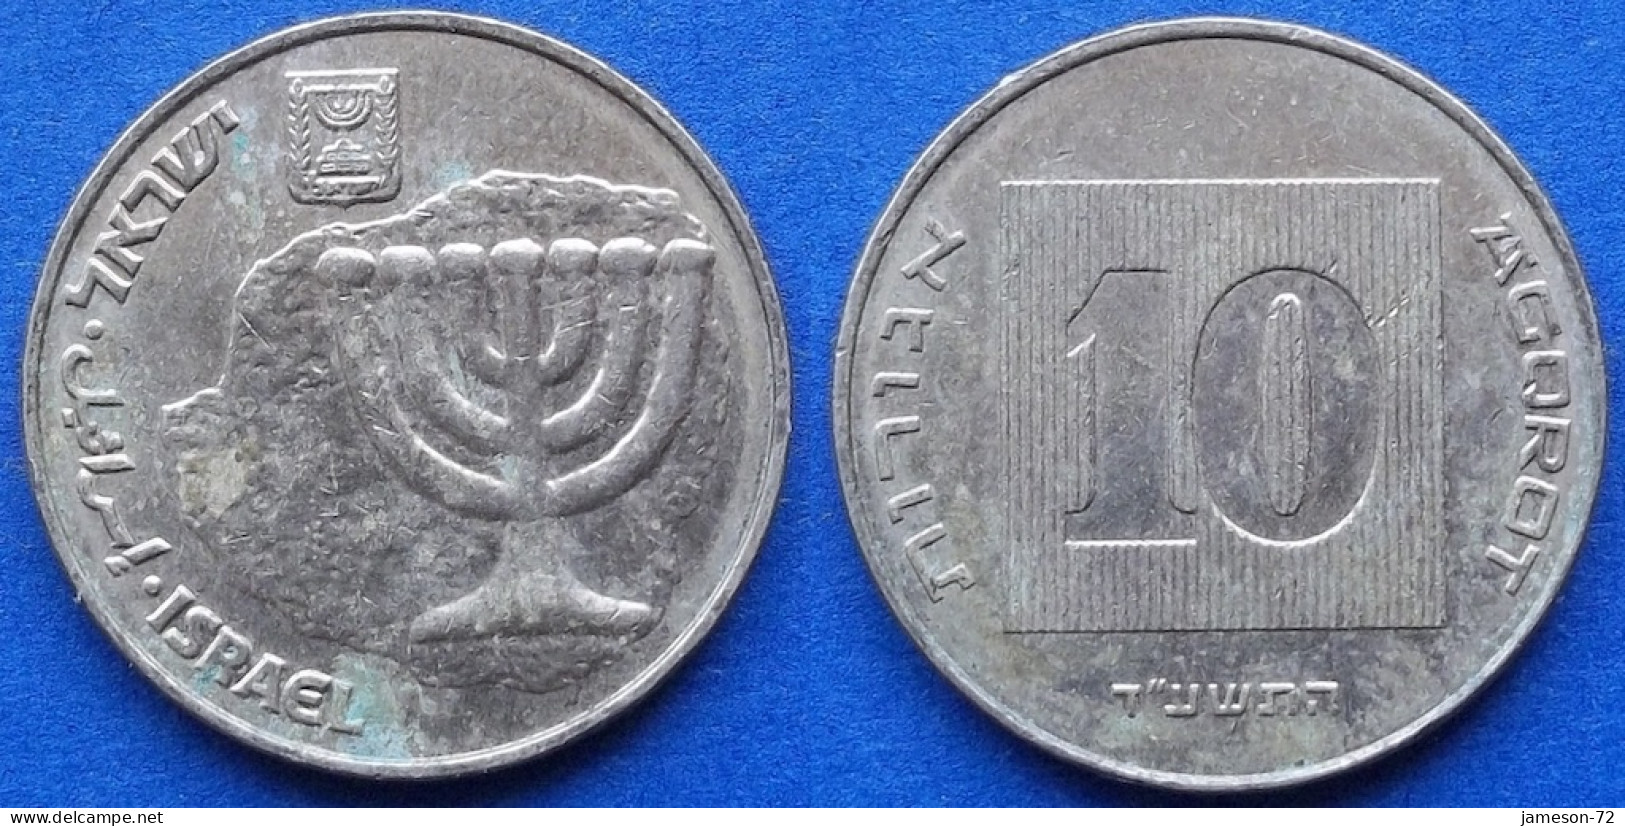 ISRAEL - 10 Agorot JE 5774 (2014AD) "Menorah" KM# 158 Monetary Reform (1985) - Edelweiss Coins - Israel